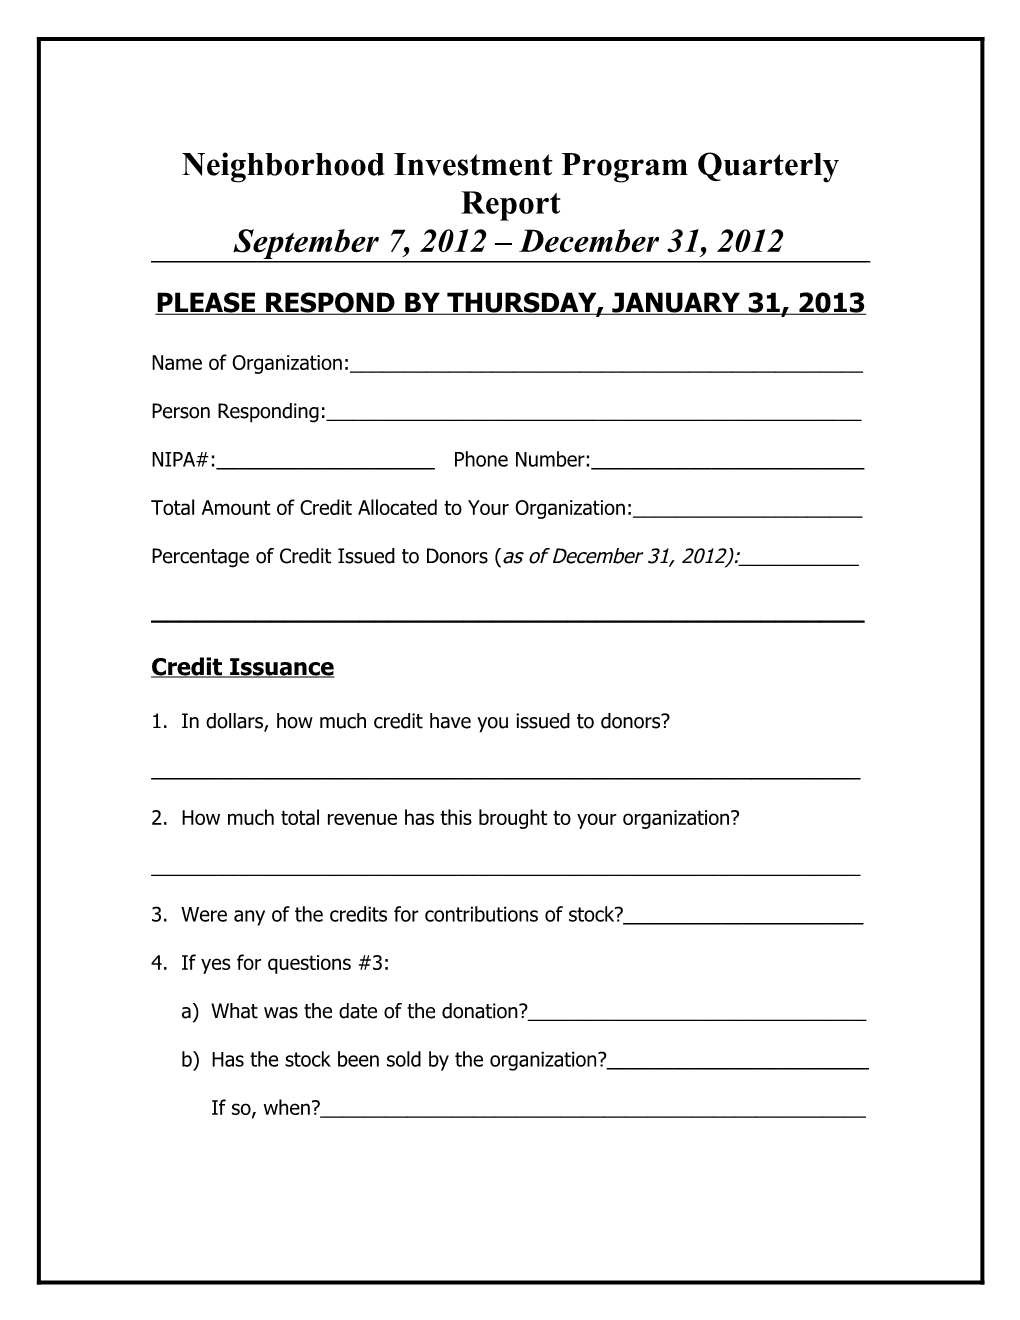 Neighborhood Investment Program Quarterly Report